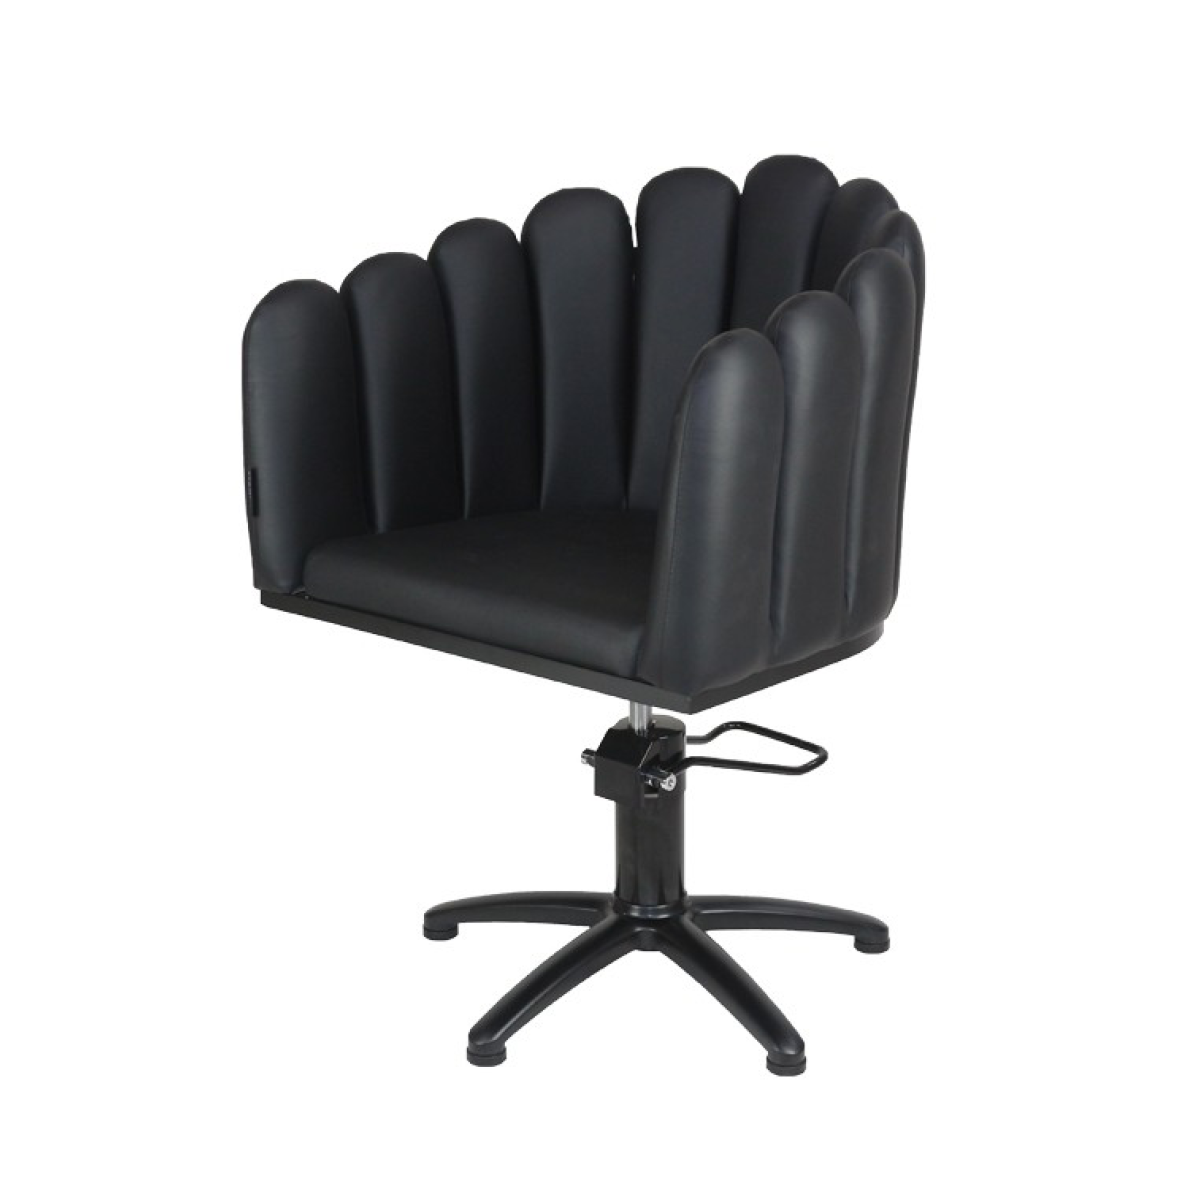 Penelope Styling Chair - Black/black 5 Star Hydraulic Base